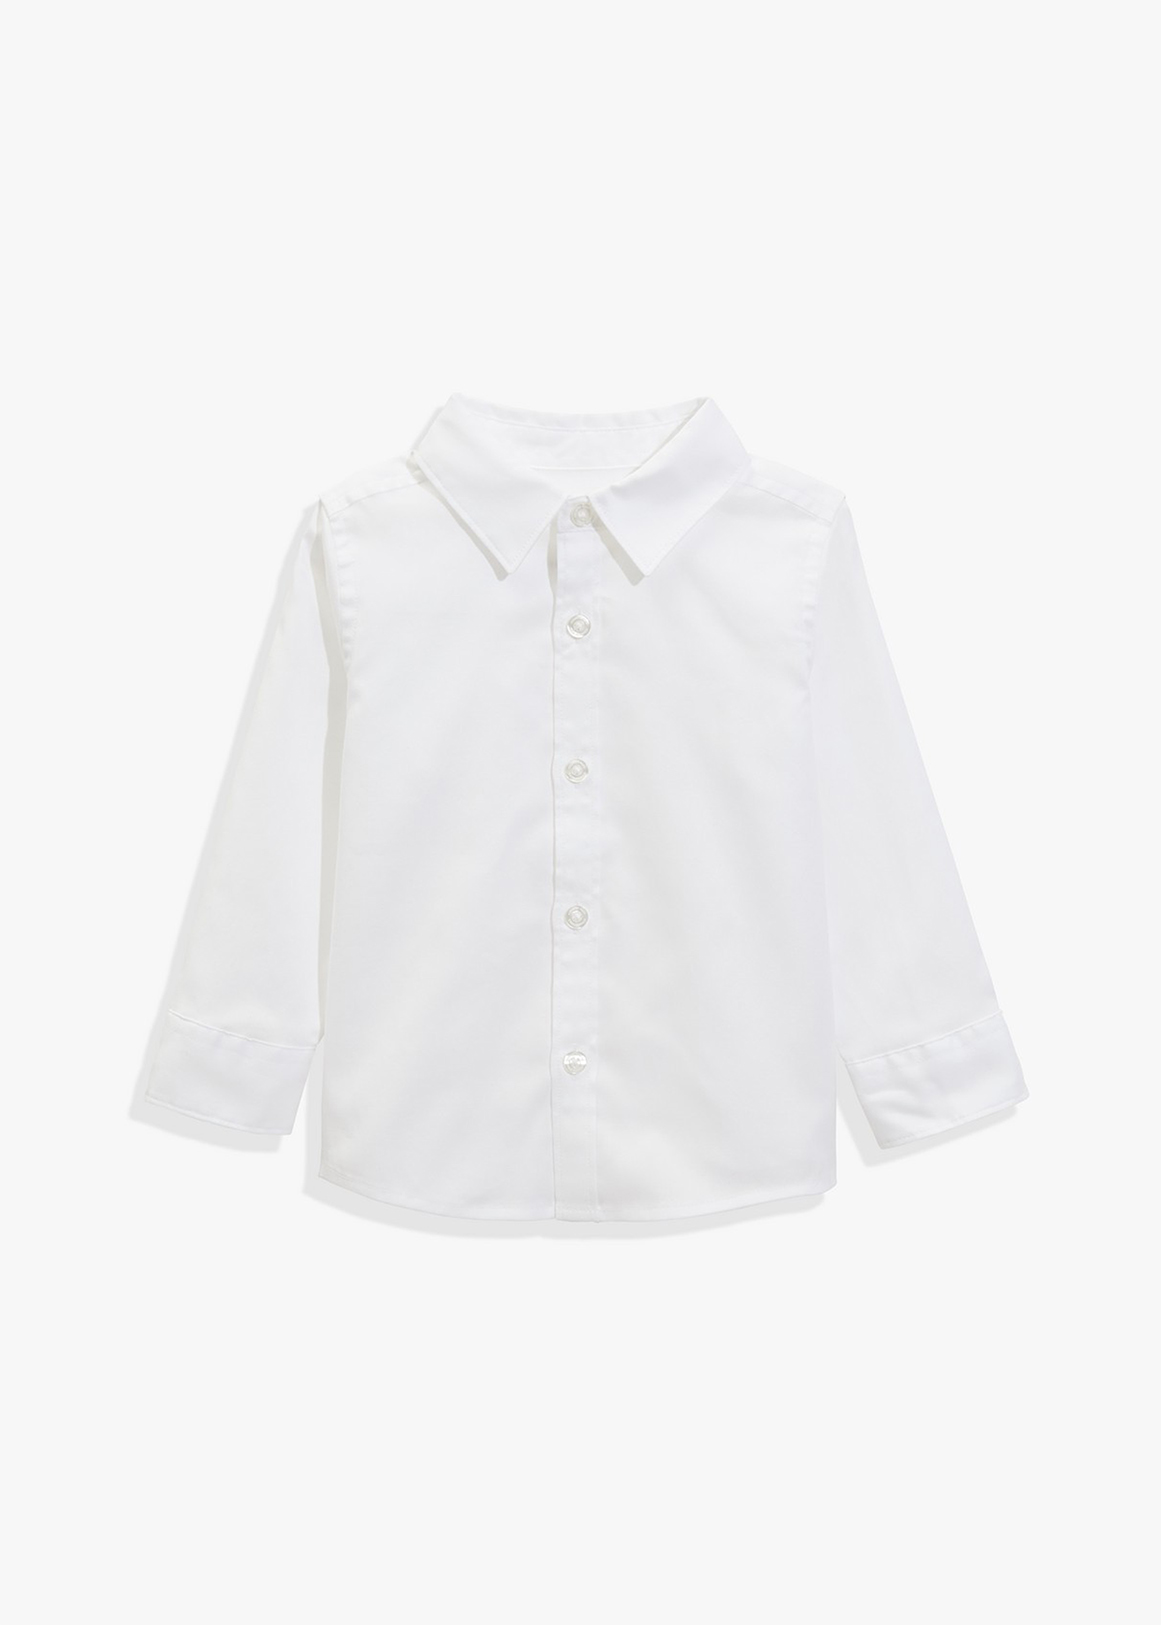 White Shirt | Woolworths.co.za